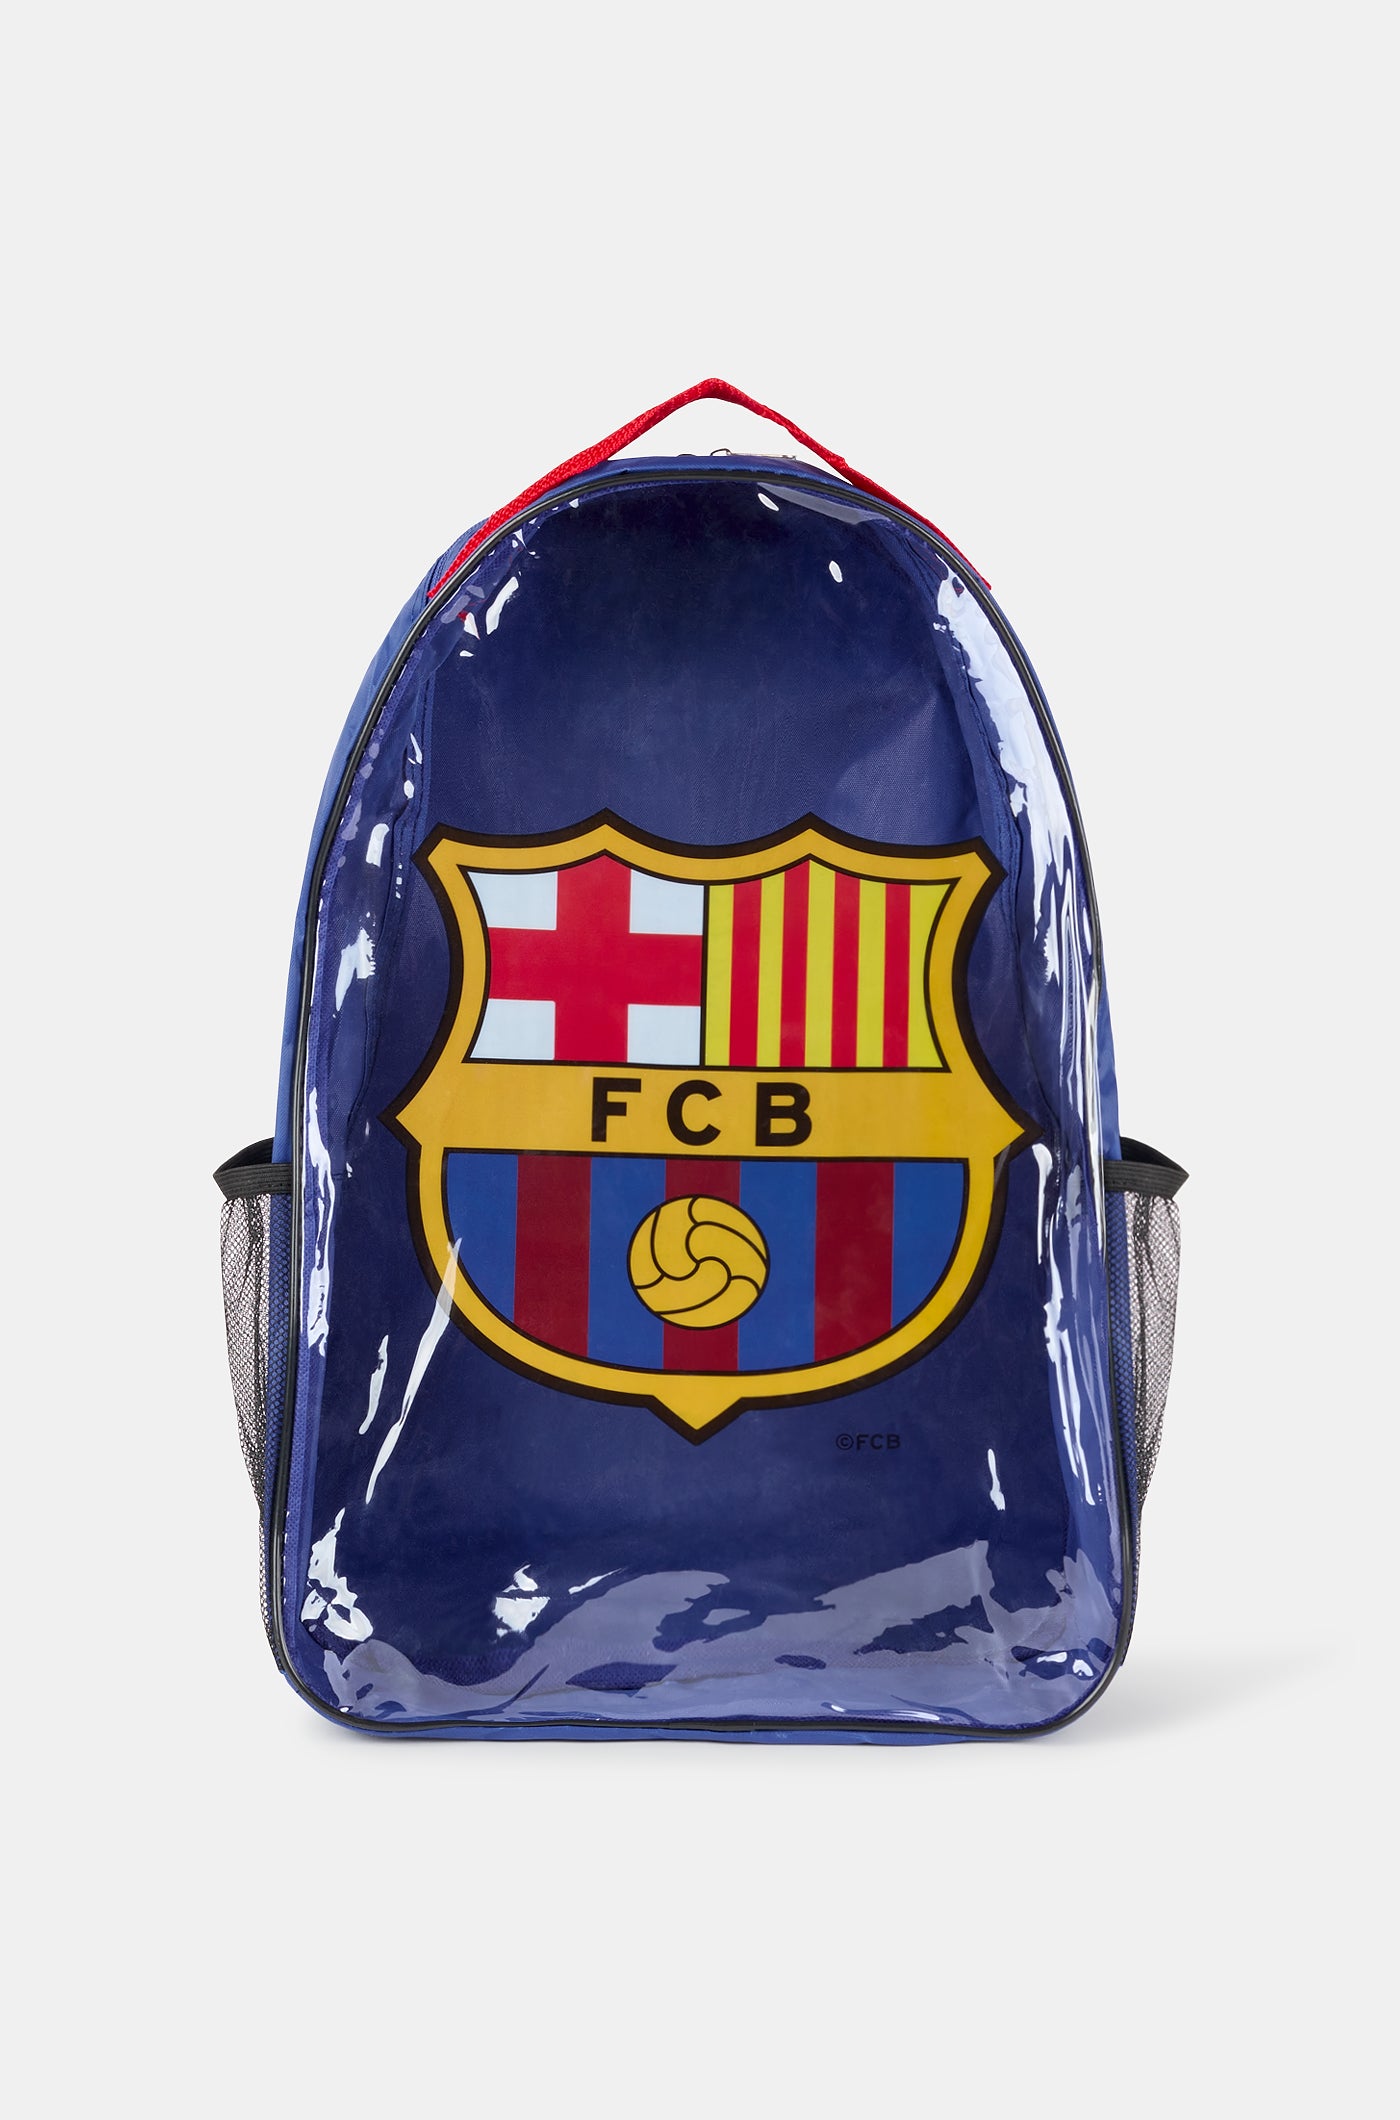 FC Barcelona Training Kit \u2013 Bar\u00e7a Official Store Spotify Camp Nou